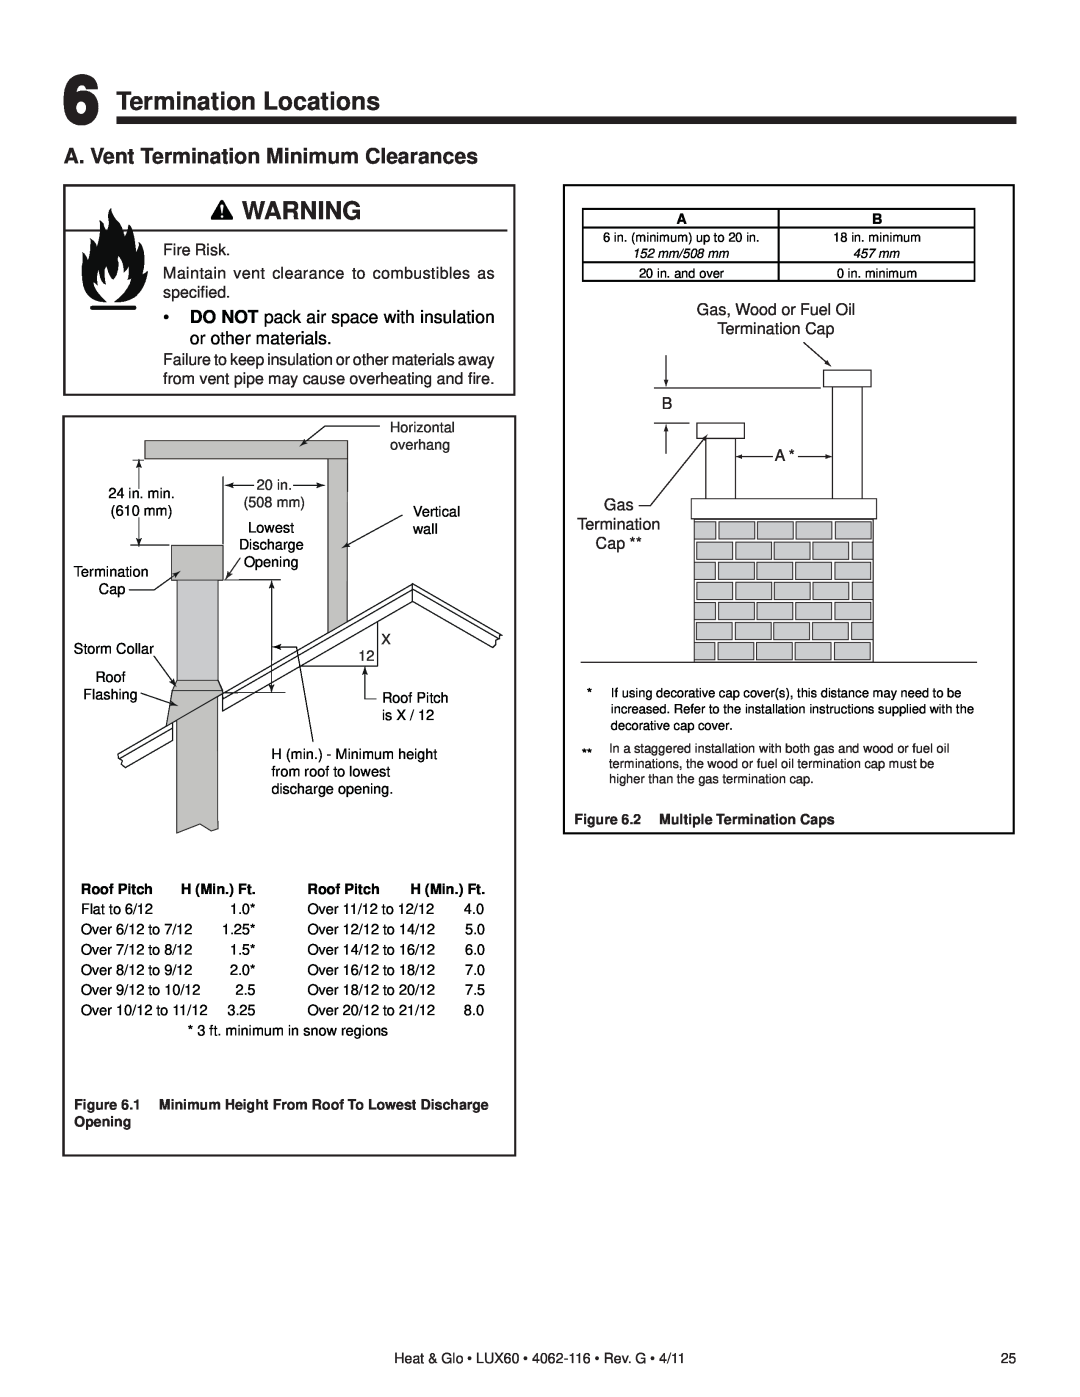 Heat & Glo LifeStyle LUX60 Termination Locations, A. Vent Termination Minimum Clearances, Fire Risk, A Gas Termination Cap 